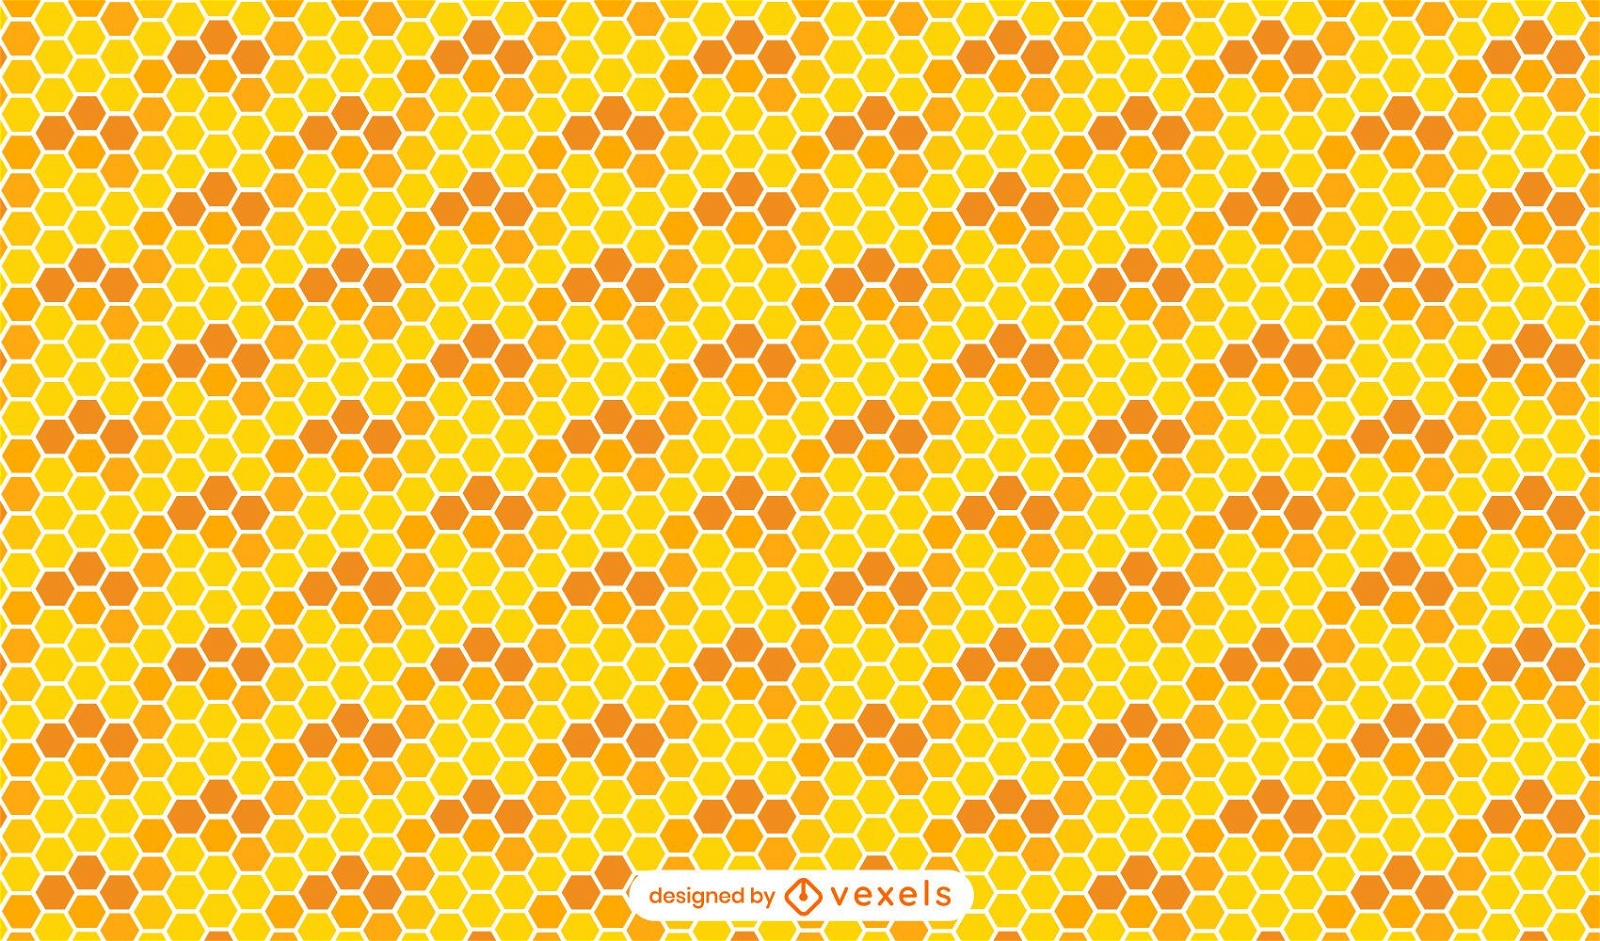 Honeycomb seamless pattern design